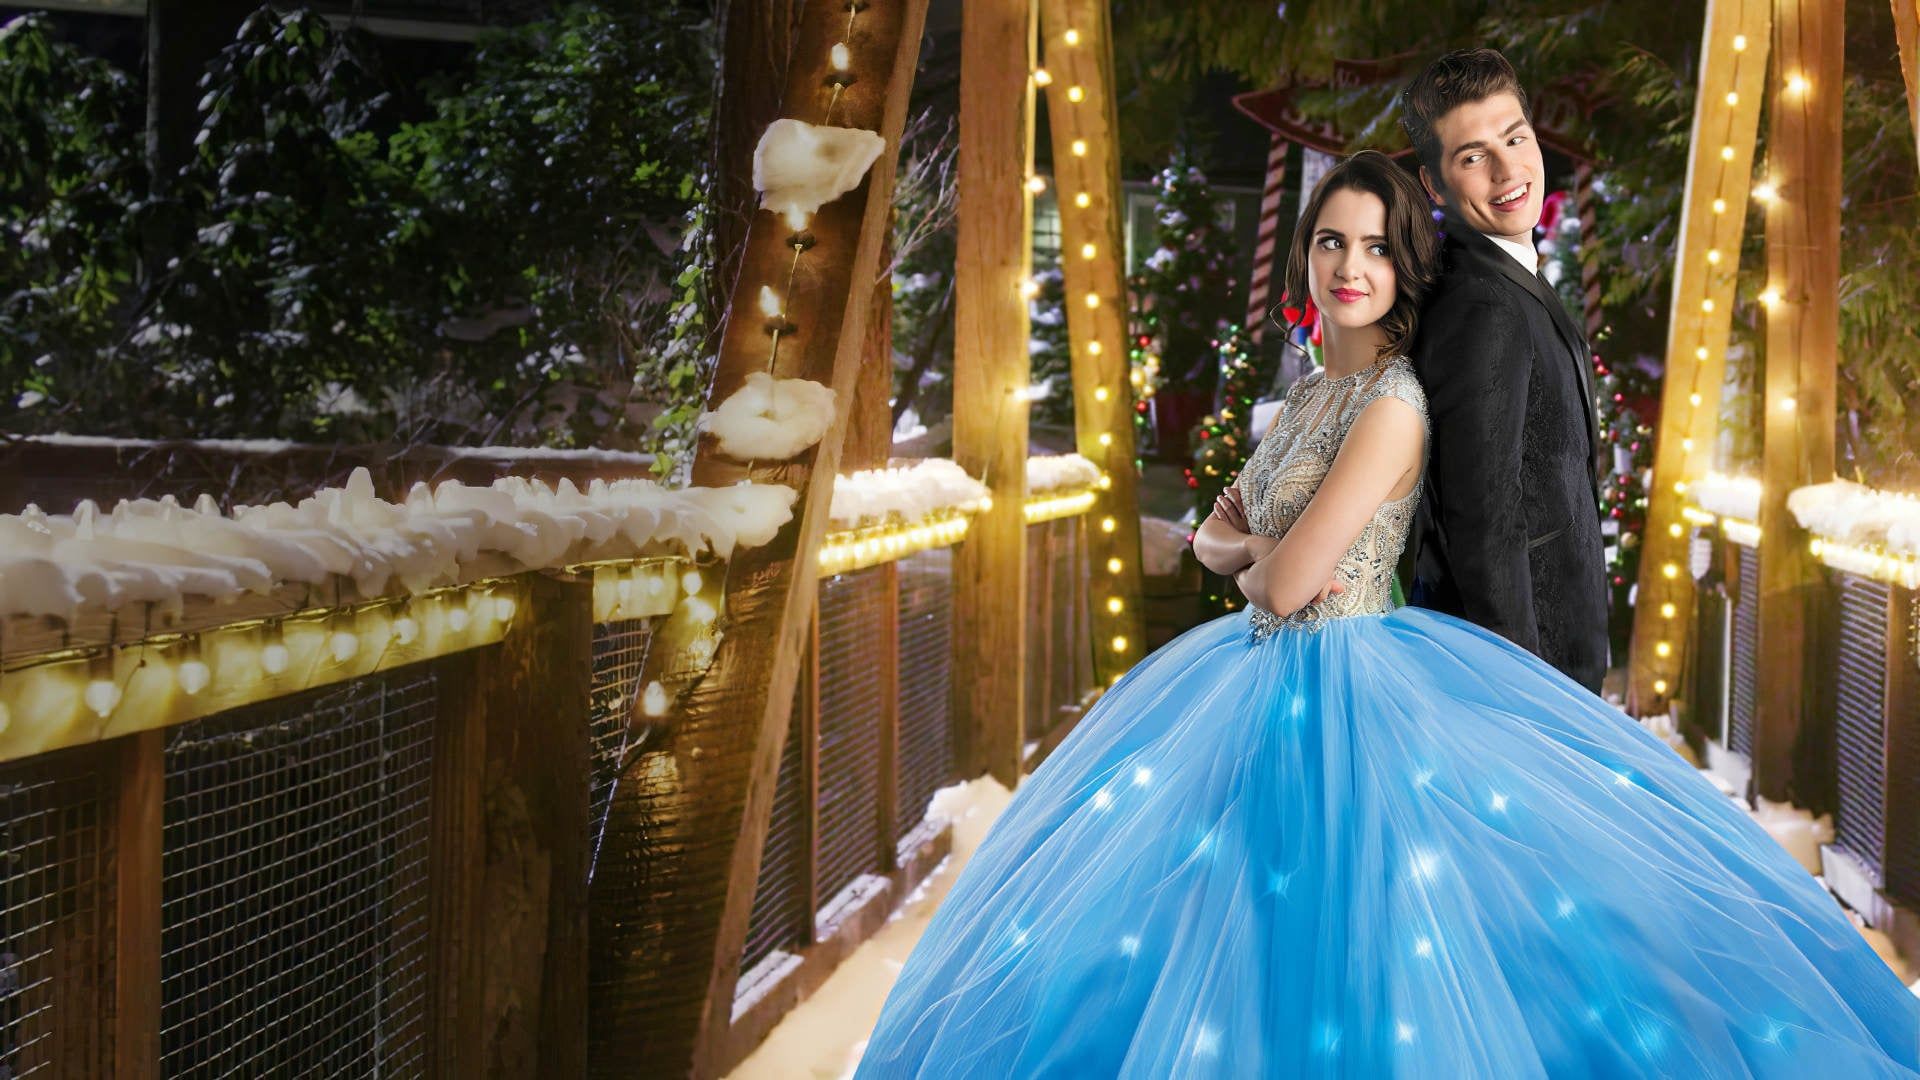 A Cinderella Story: Christmas Wish Backdrop